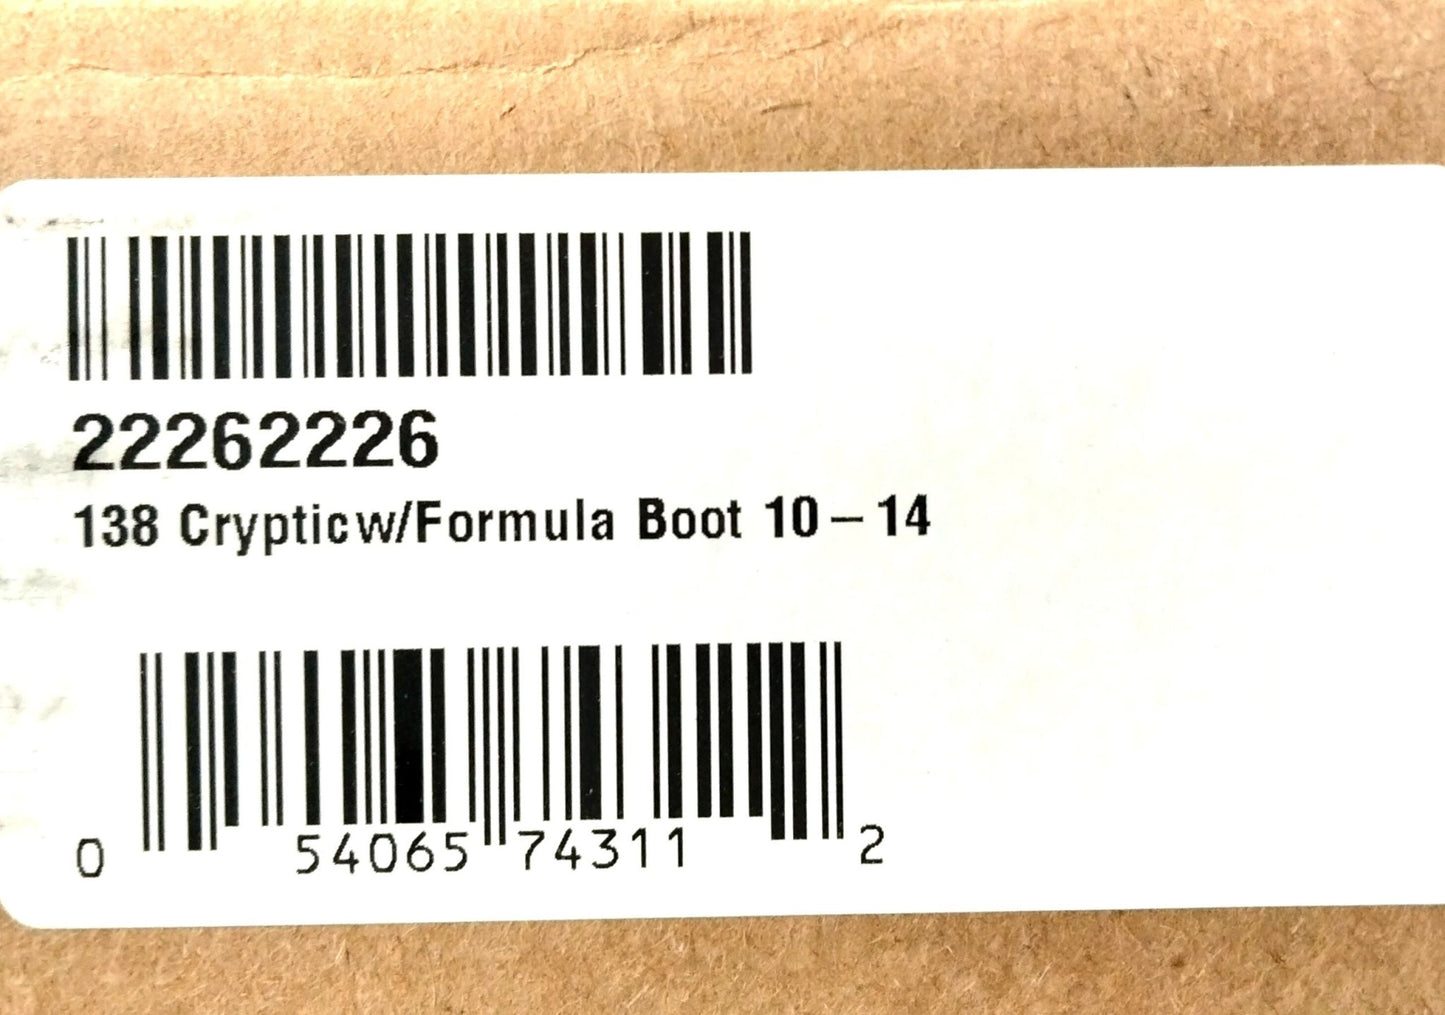 Hyperlite Cryptic138cm Wakeboard w/Formula Boot 10-14 - 22262226 MSRP $690 NEW - Random Bike Parts